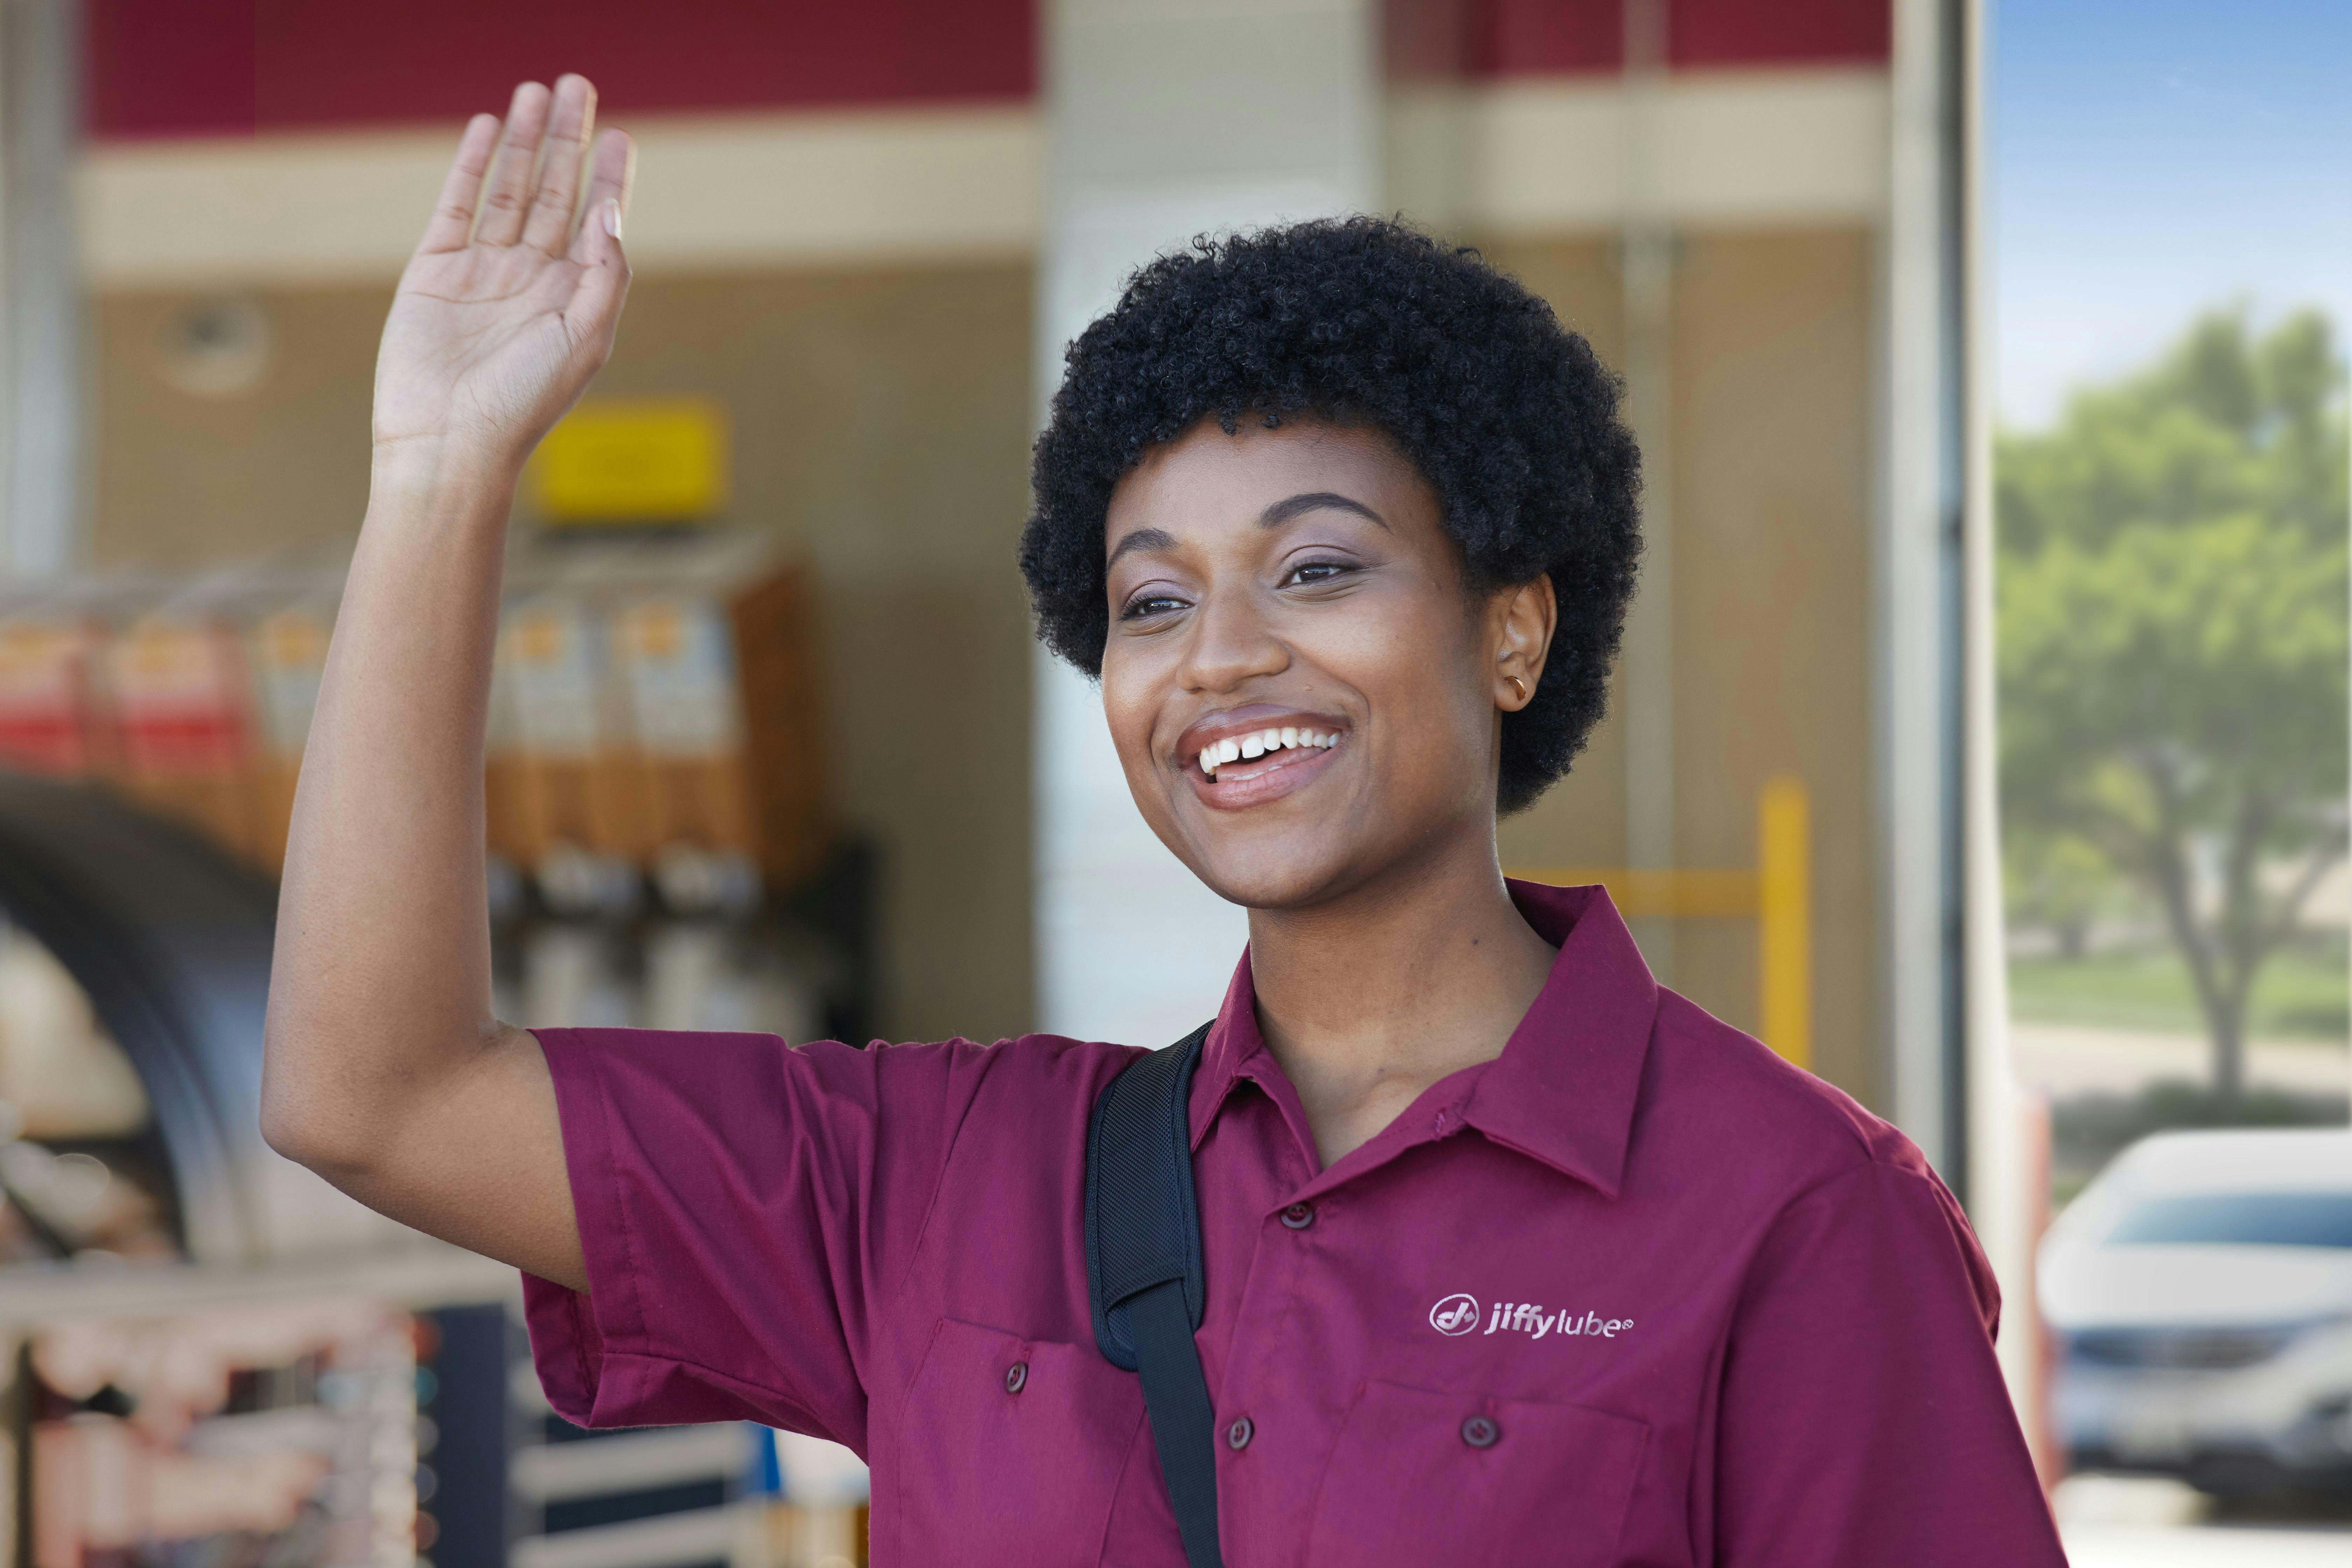 Jiffy Lube employee waving goodbye to a customer